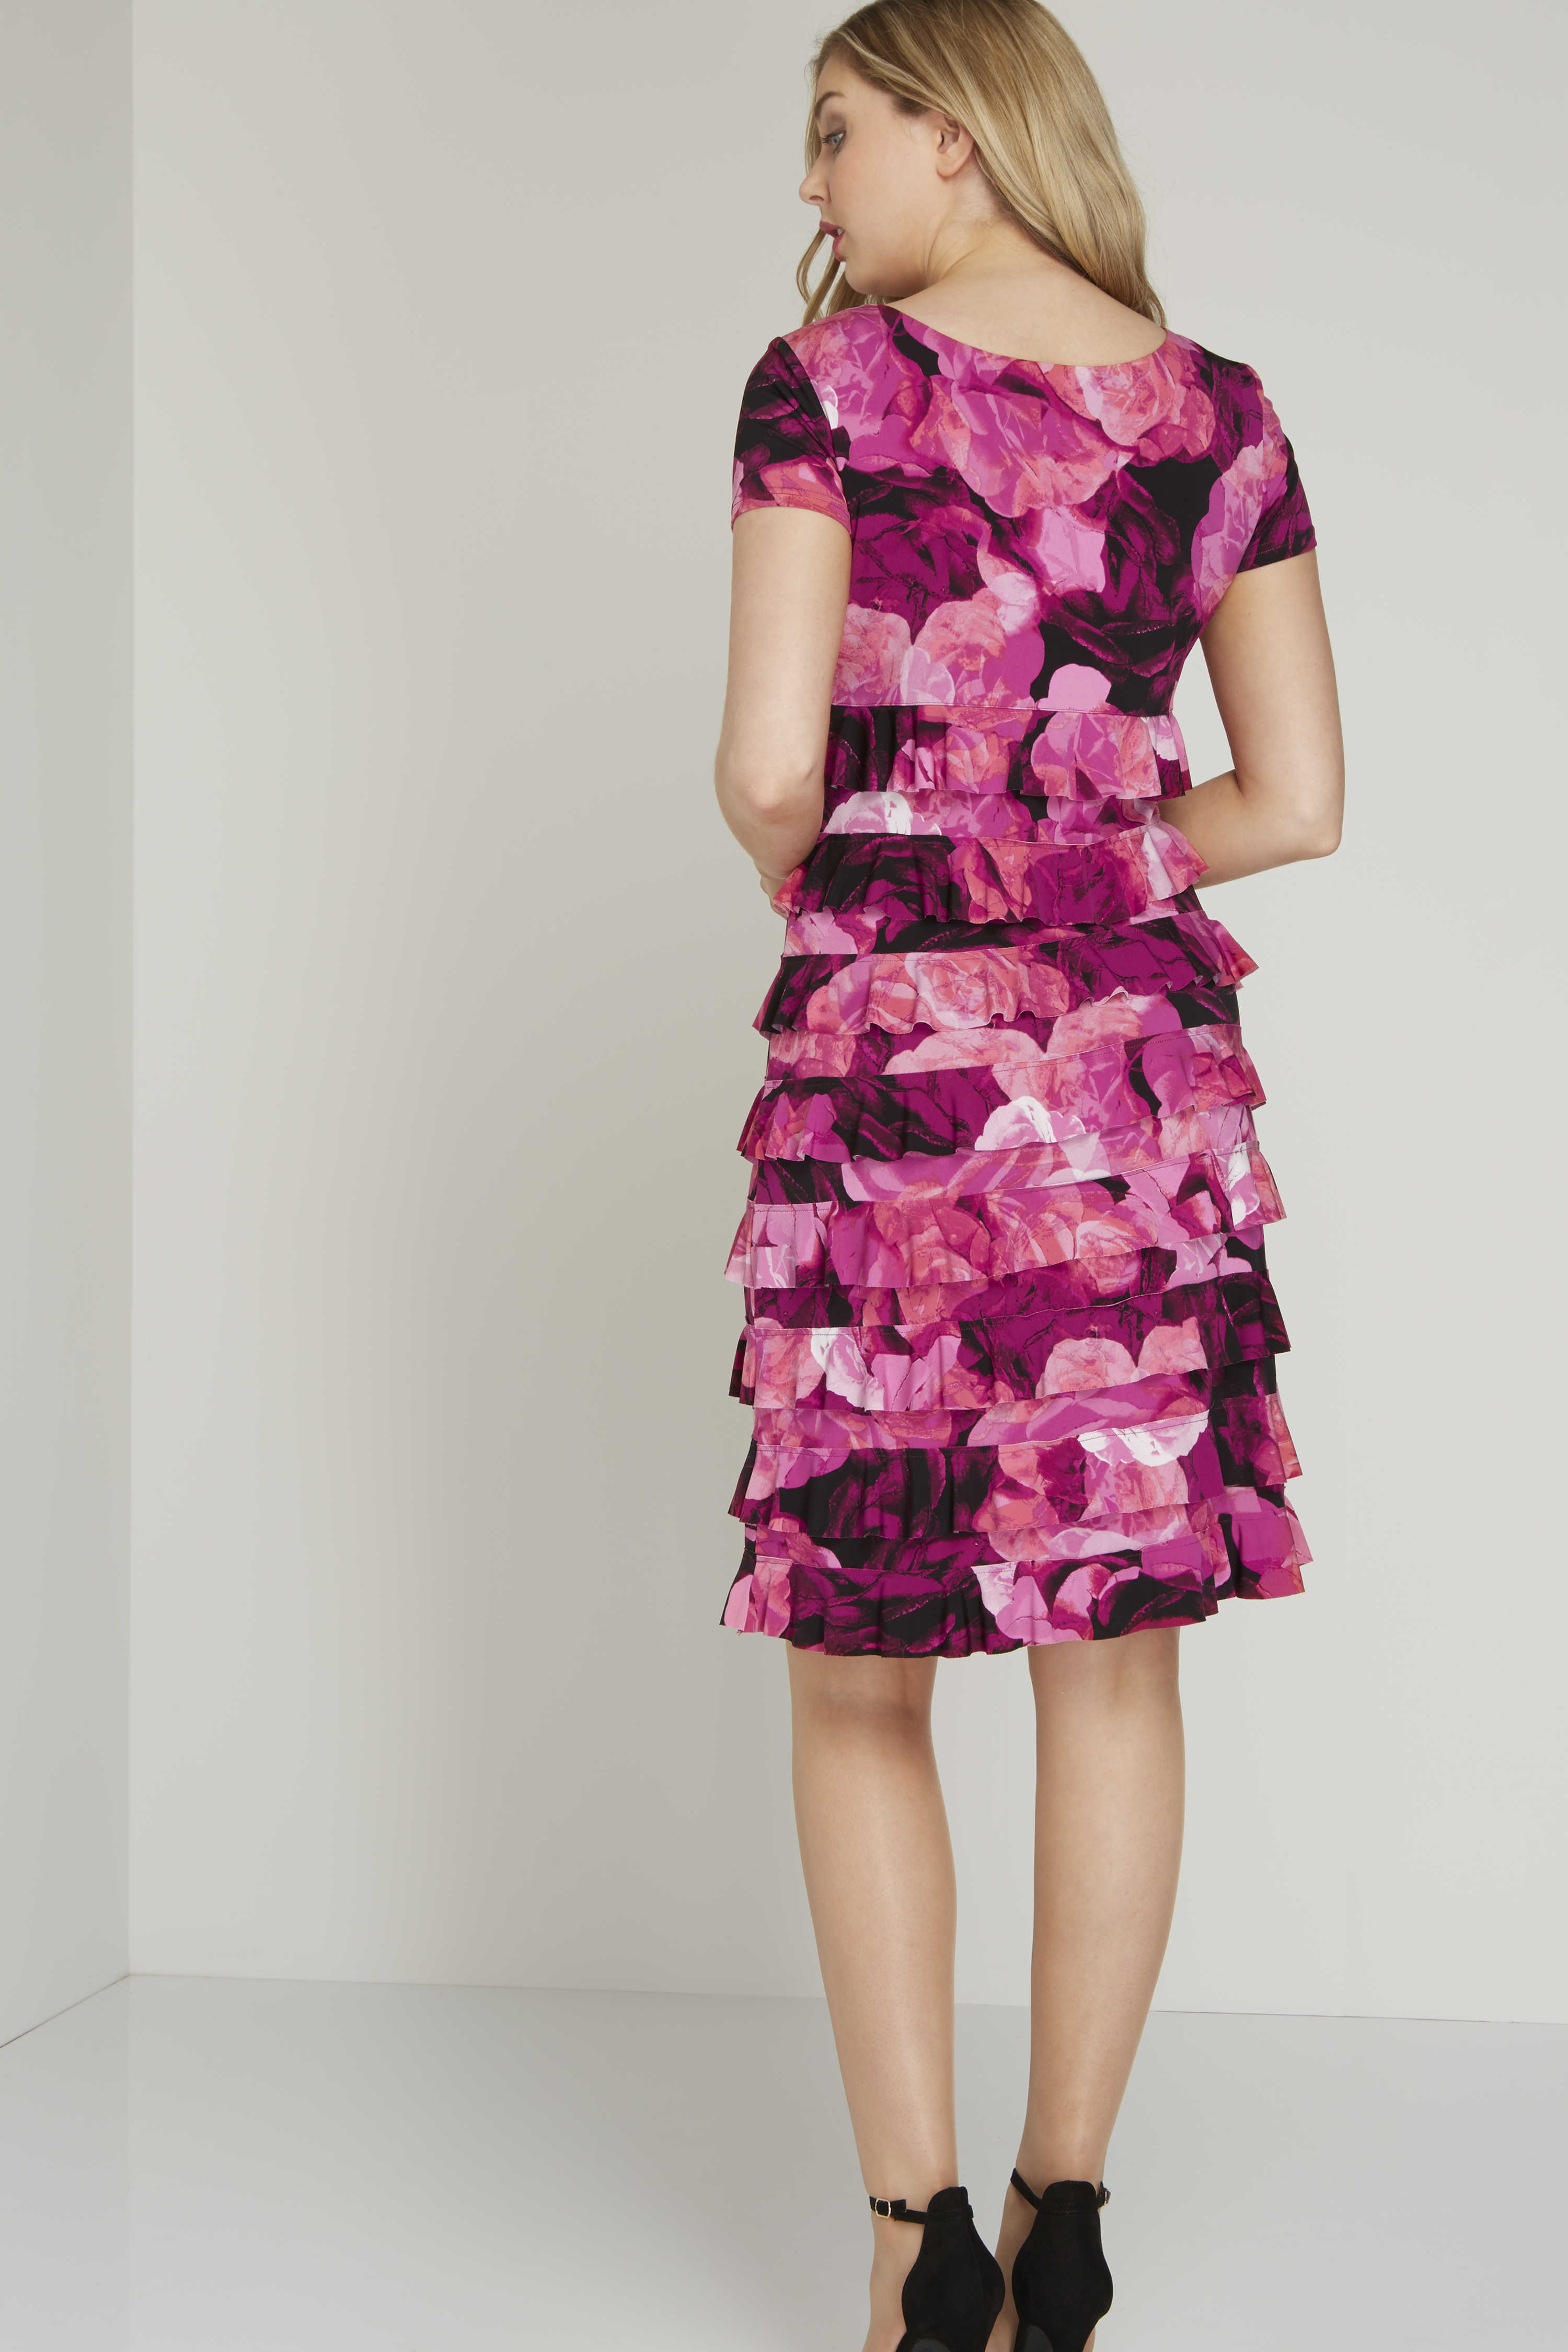 CERISE Floral Frill Dress, Image 4 of 6